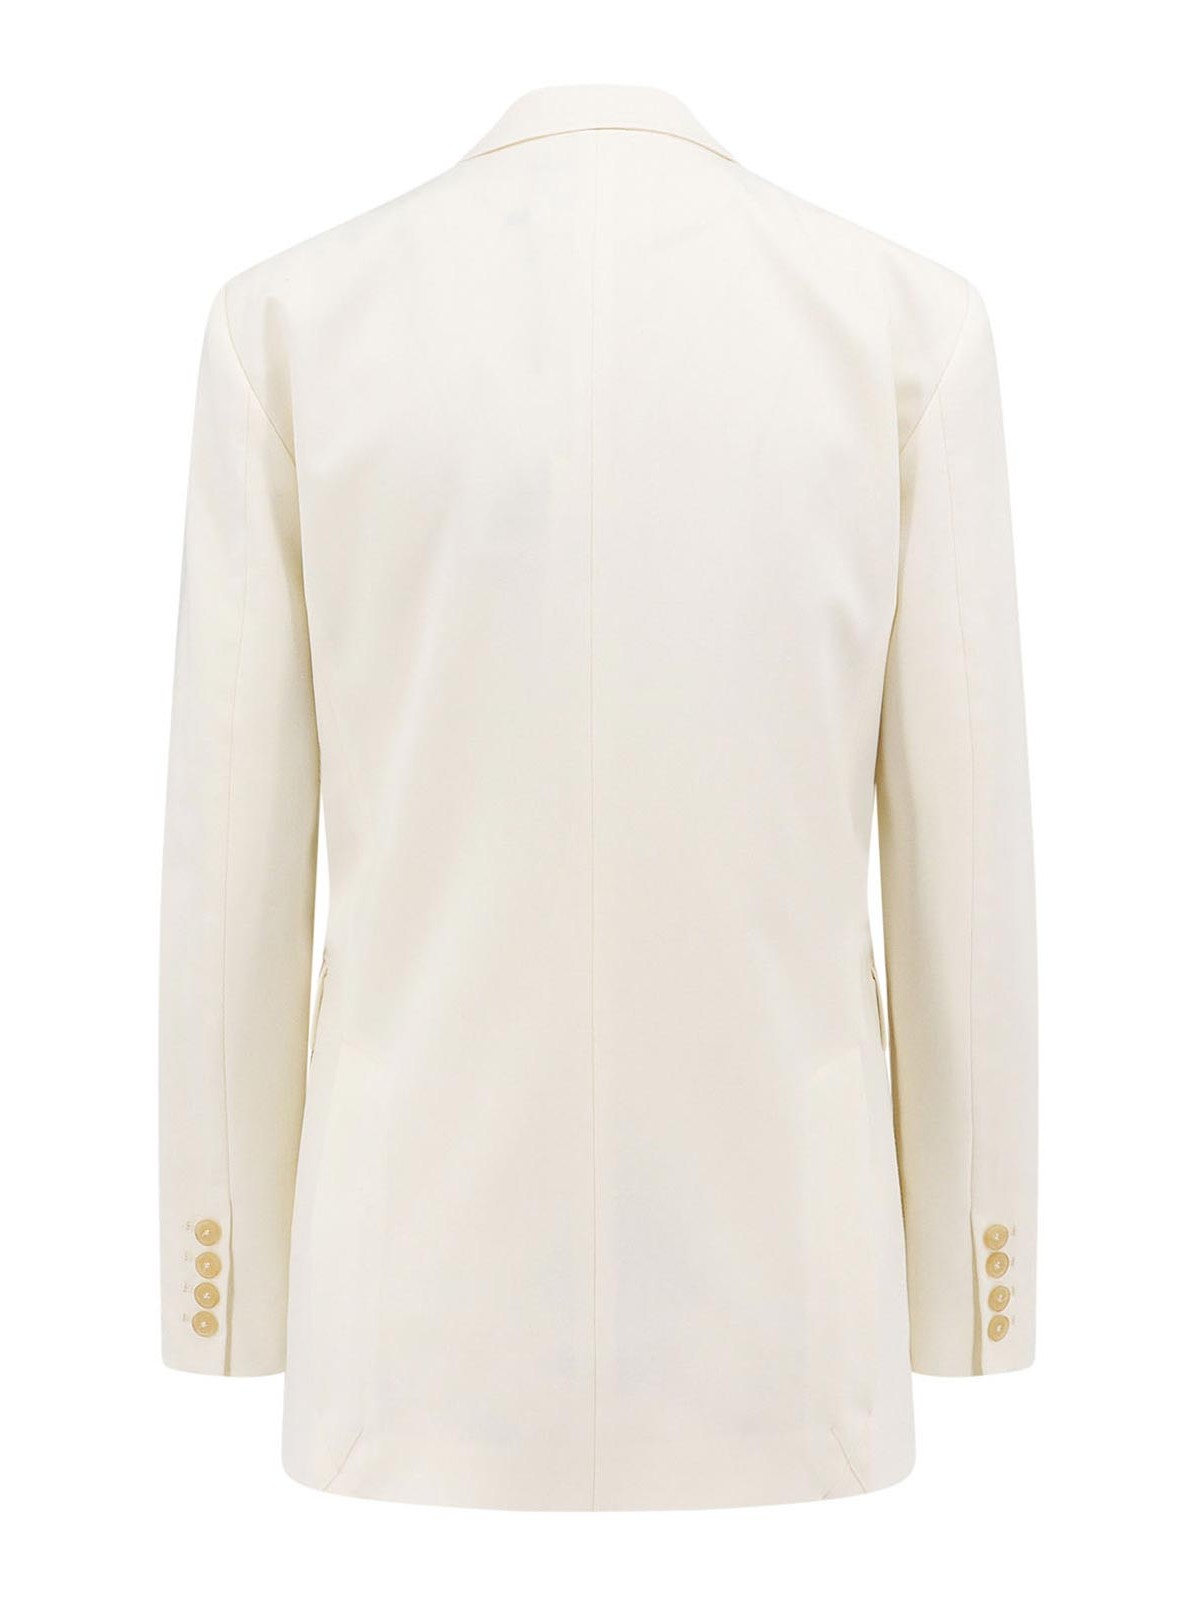 Shop Erika Cavallini Virgin Wool Blend Blazer In Blanco